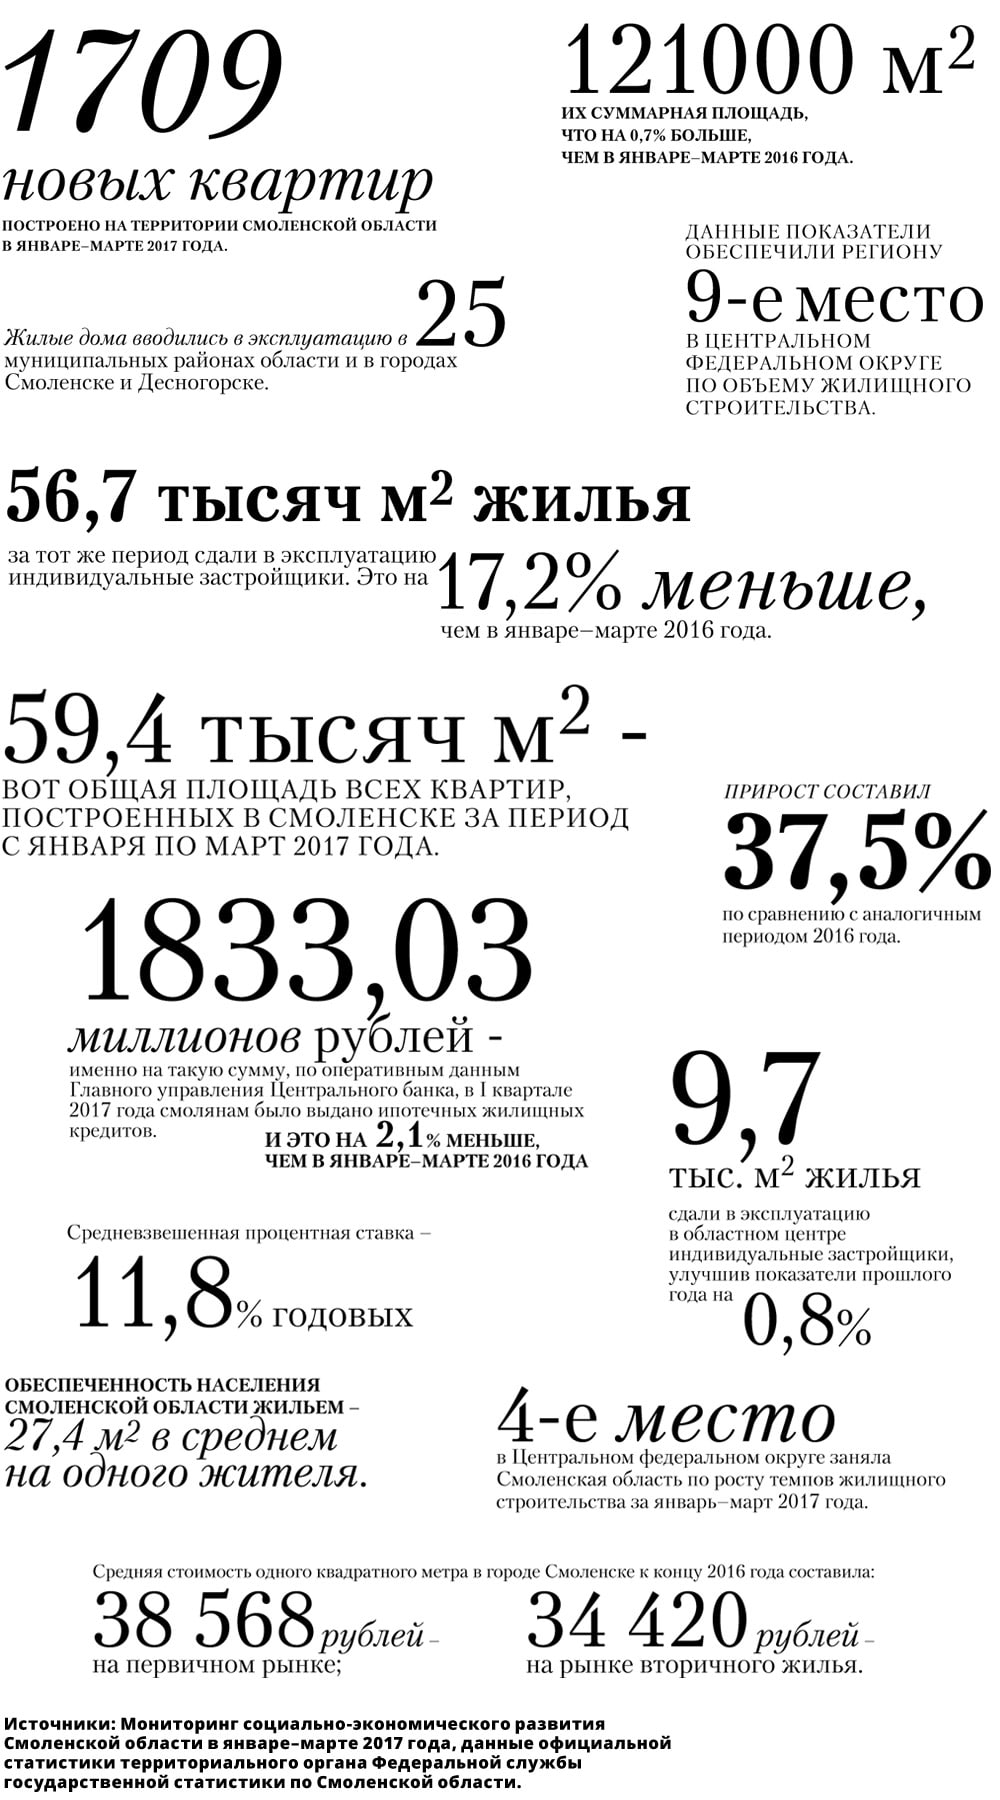 infografika-stroika_september2017_1000x1800-min